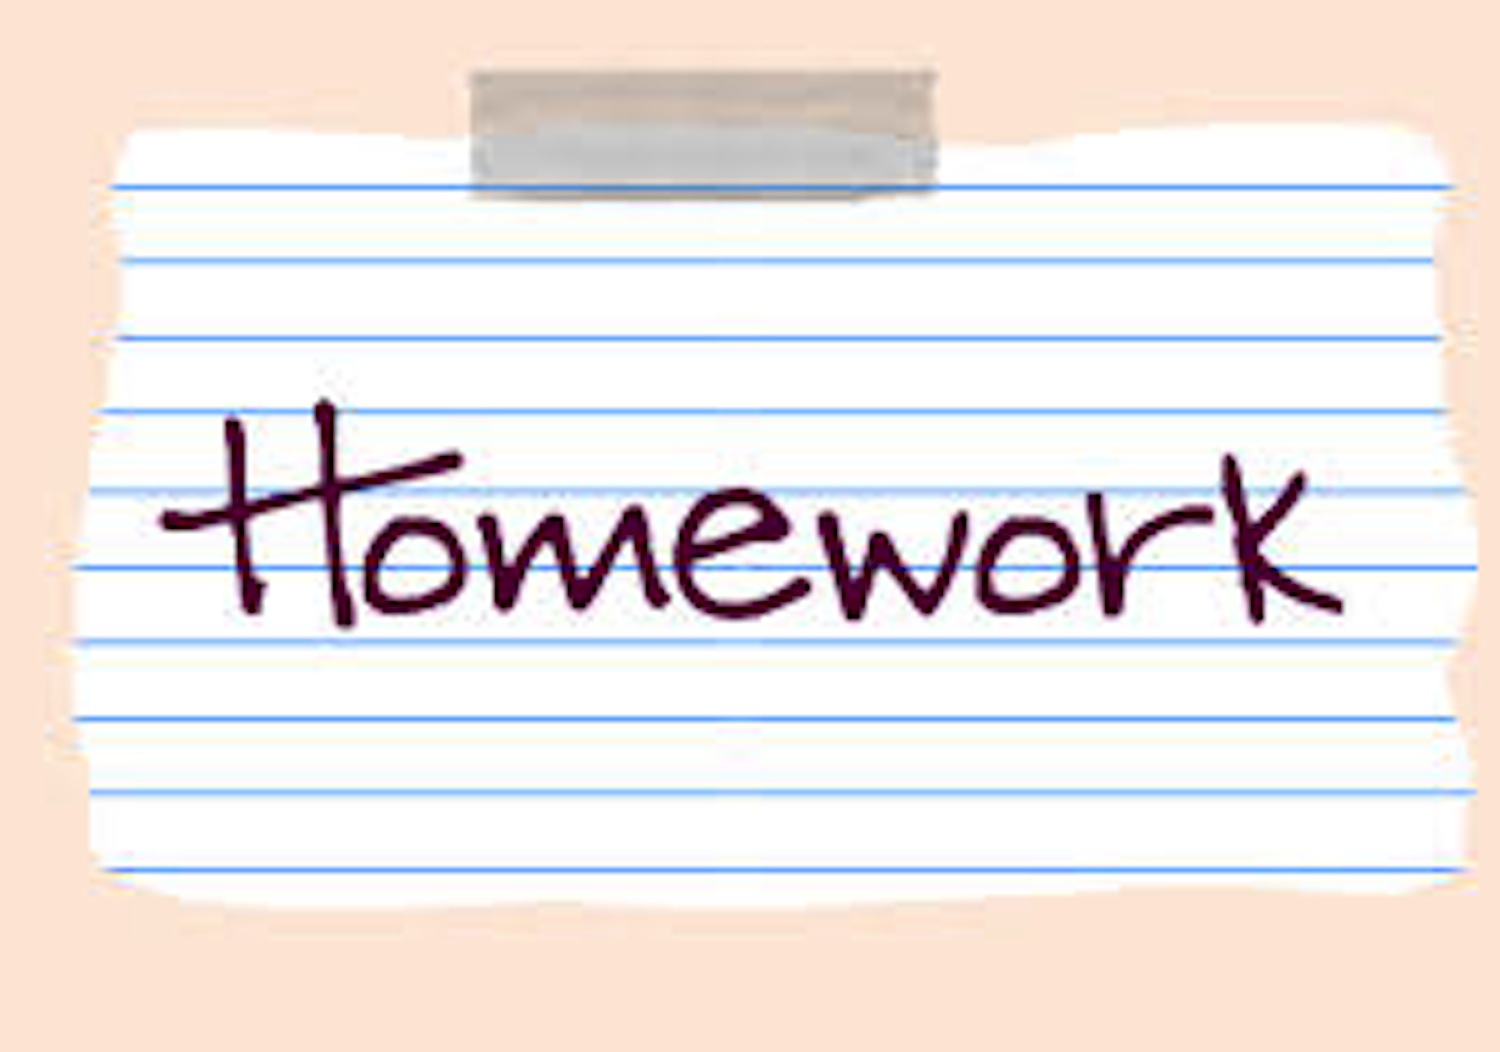 Homework pictures. Домашнее задание на английском. Homework. Homework надпись. Homework картинка.